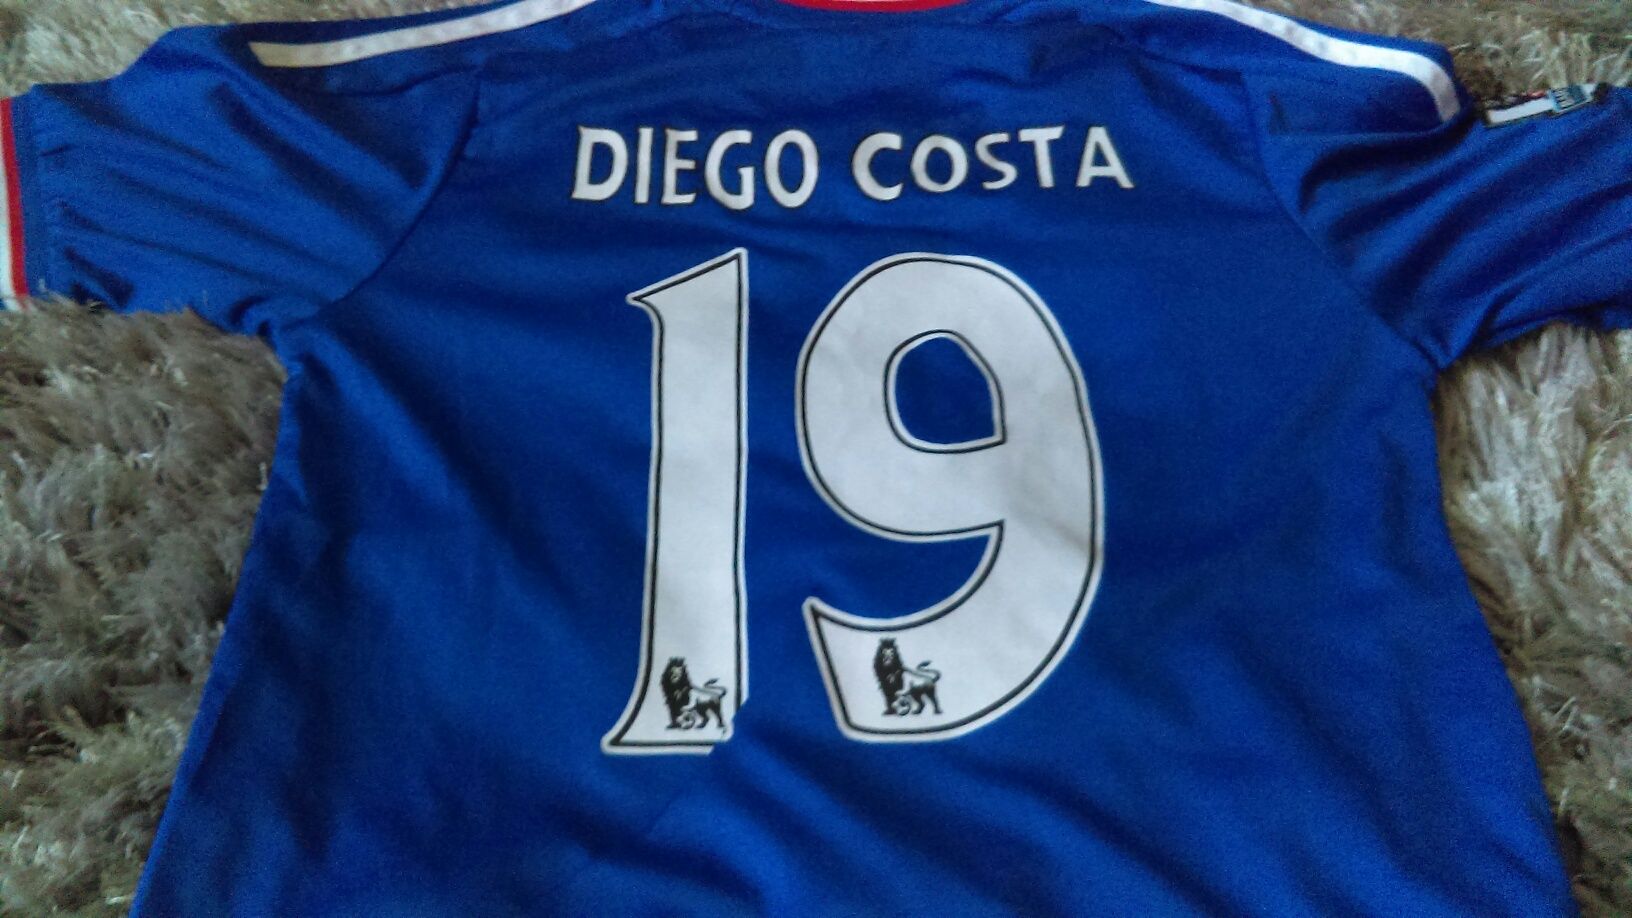 Koszulka Chelsea, 19 Diego Costa